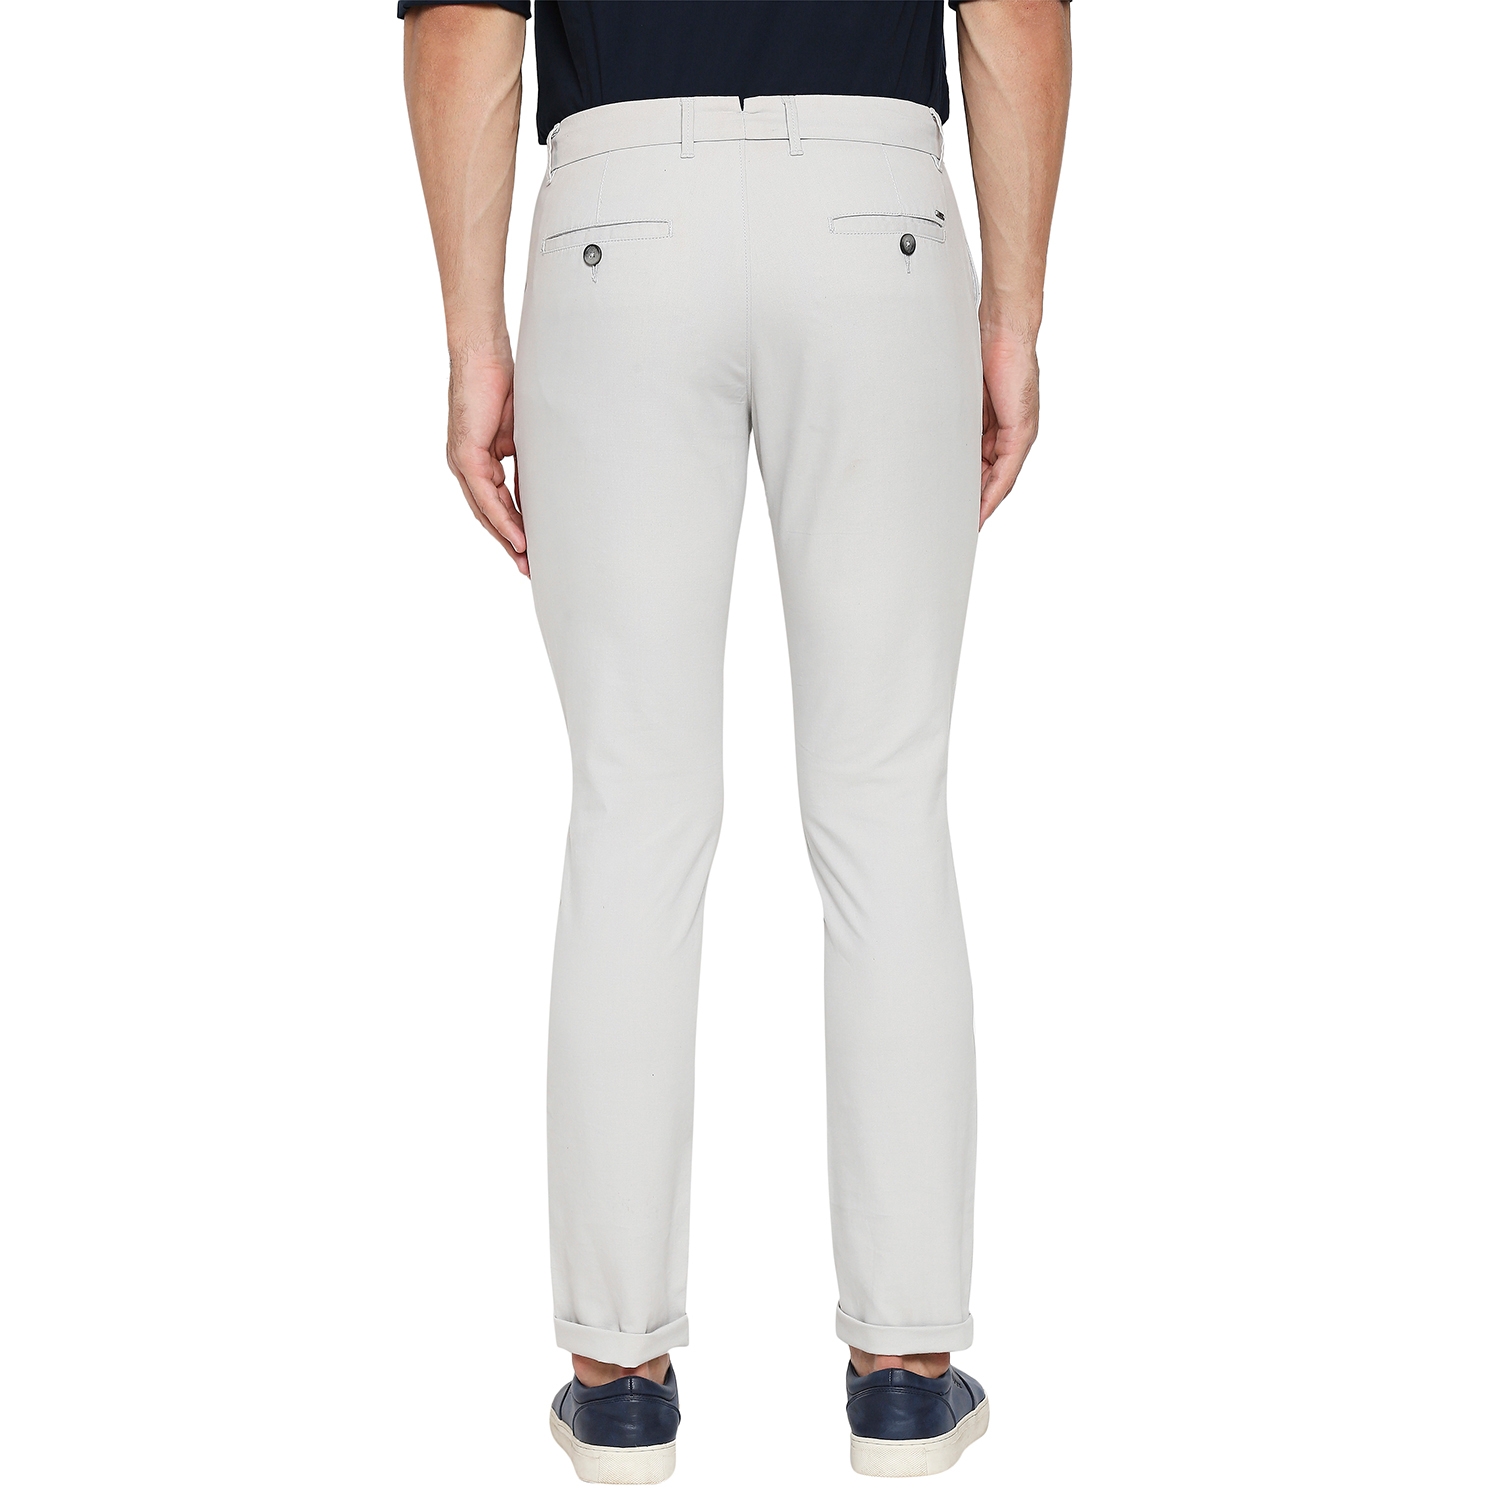 Basics | Men's Light Grey Cotton Blend Solid Trouser 1